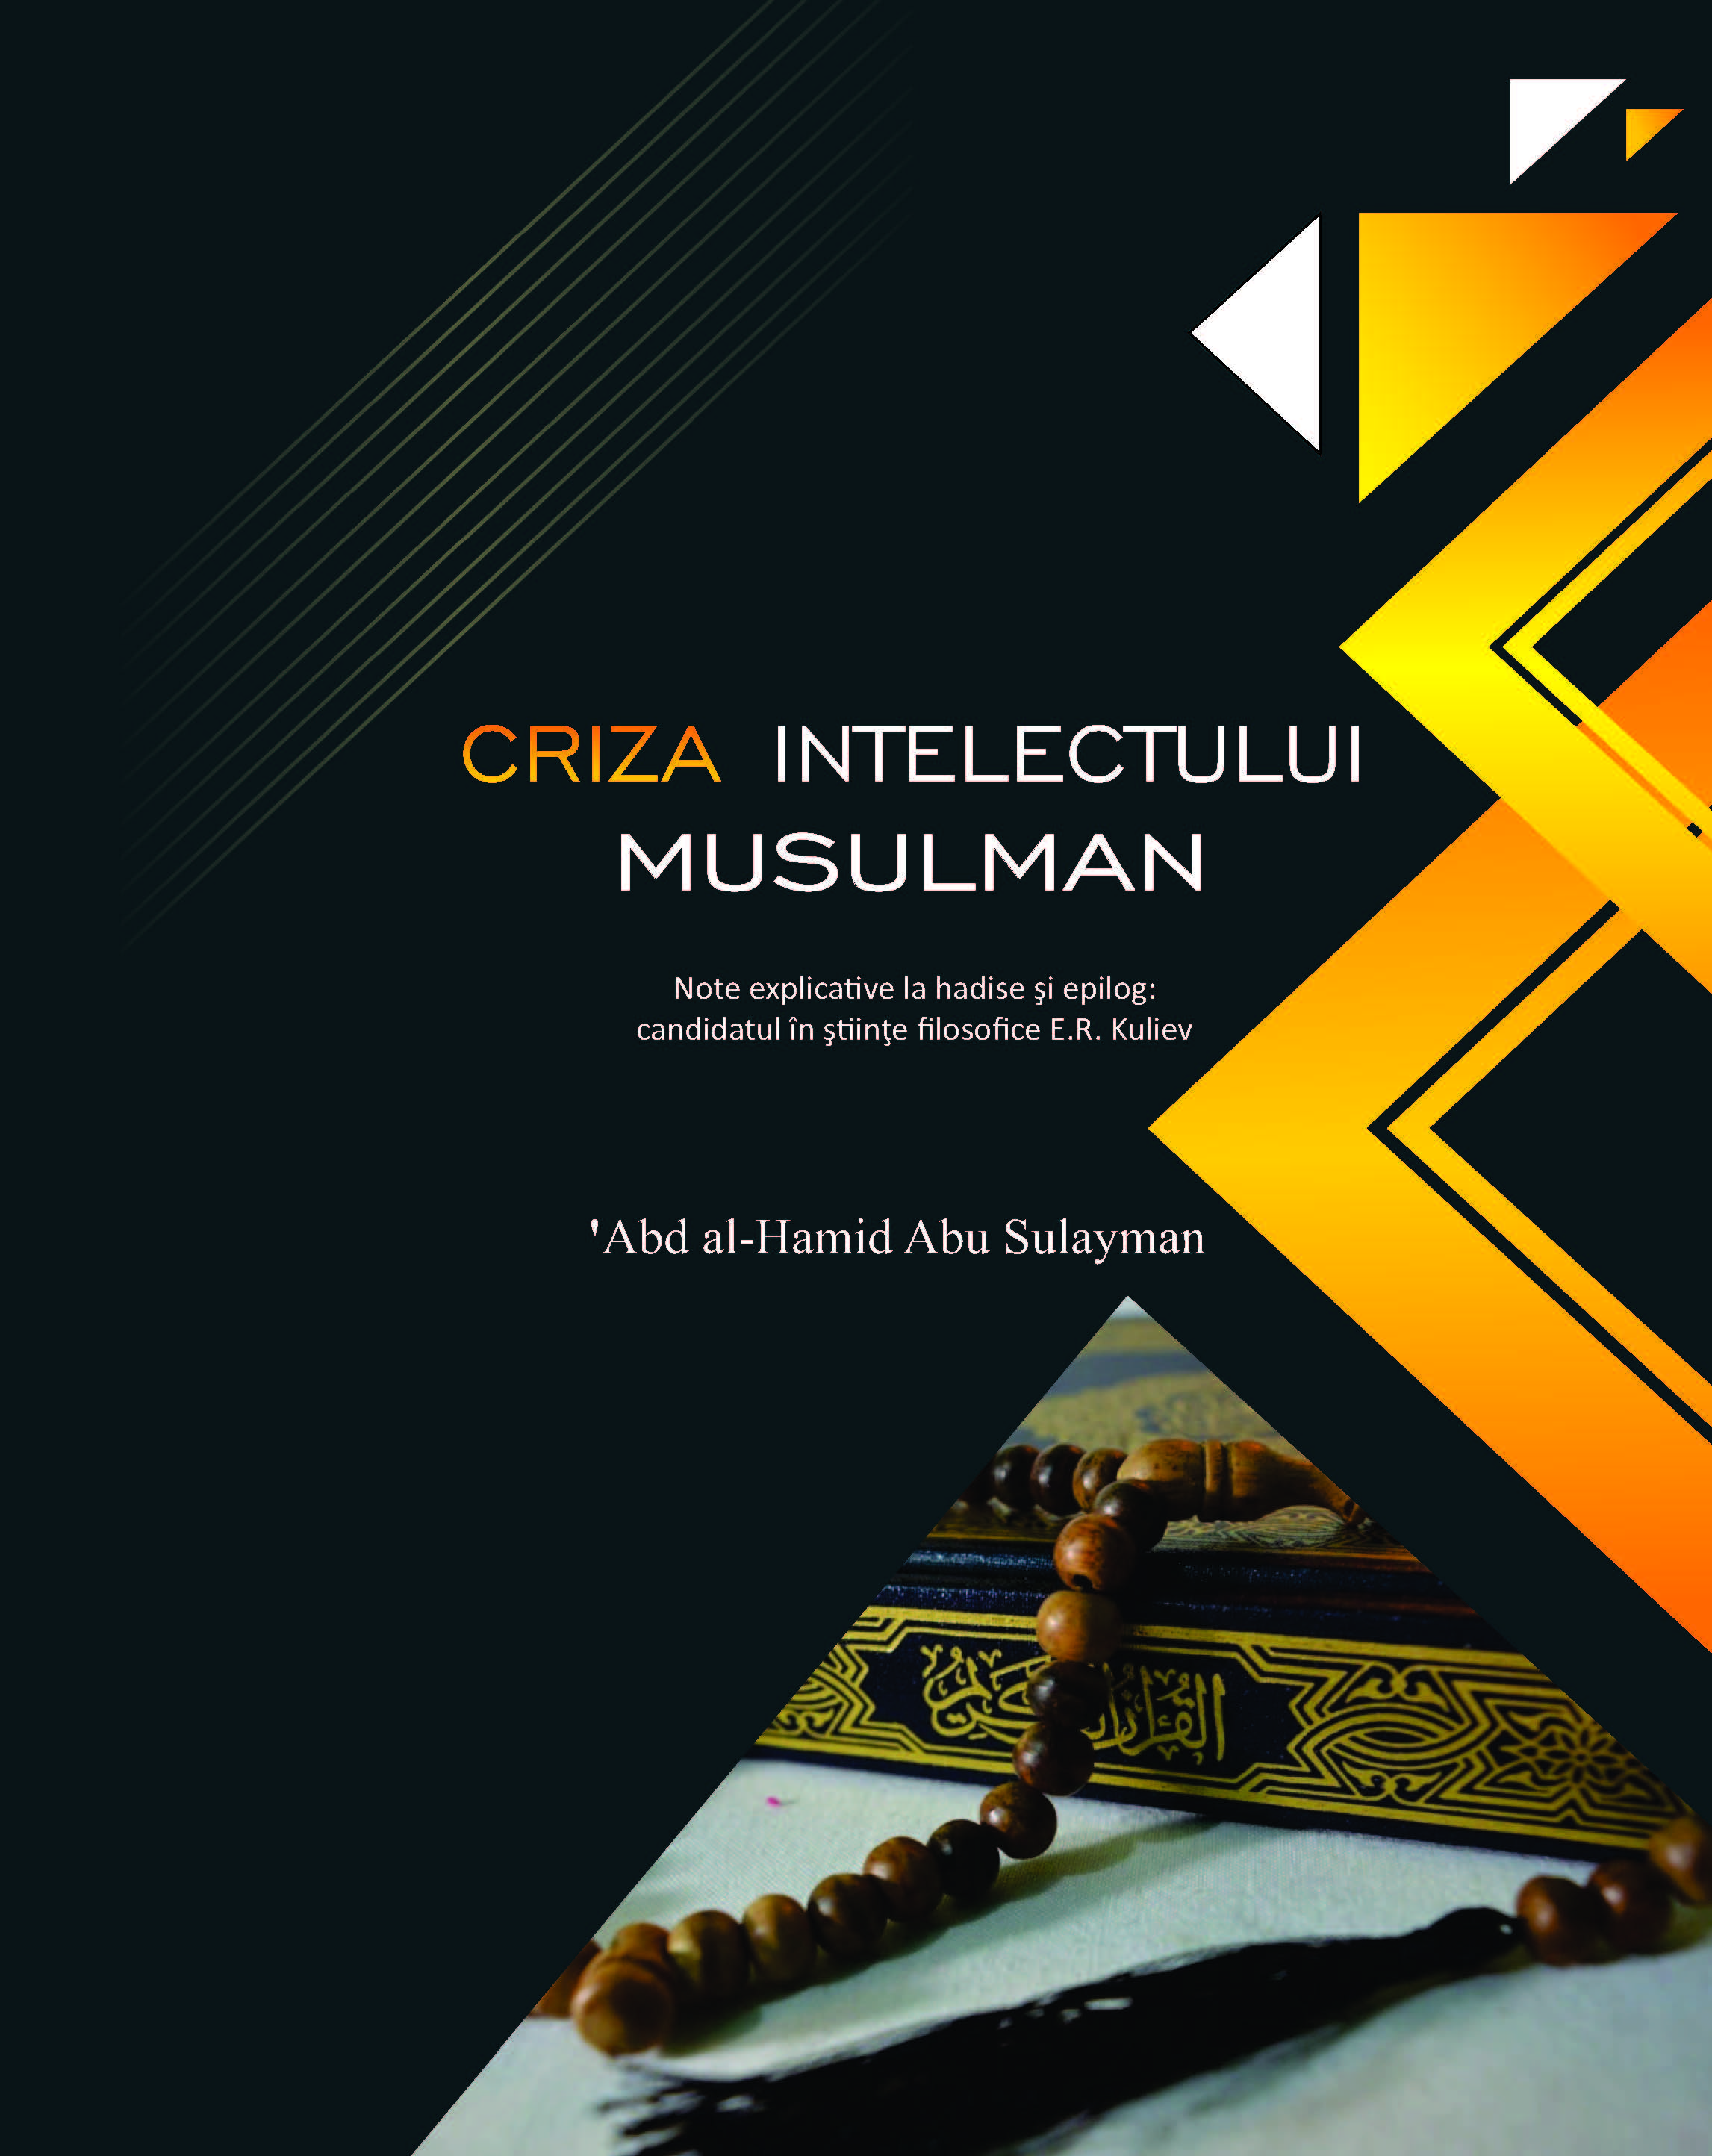 Romanian: Criza intelectului musulman (Crisis in the Muslim Mind)